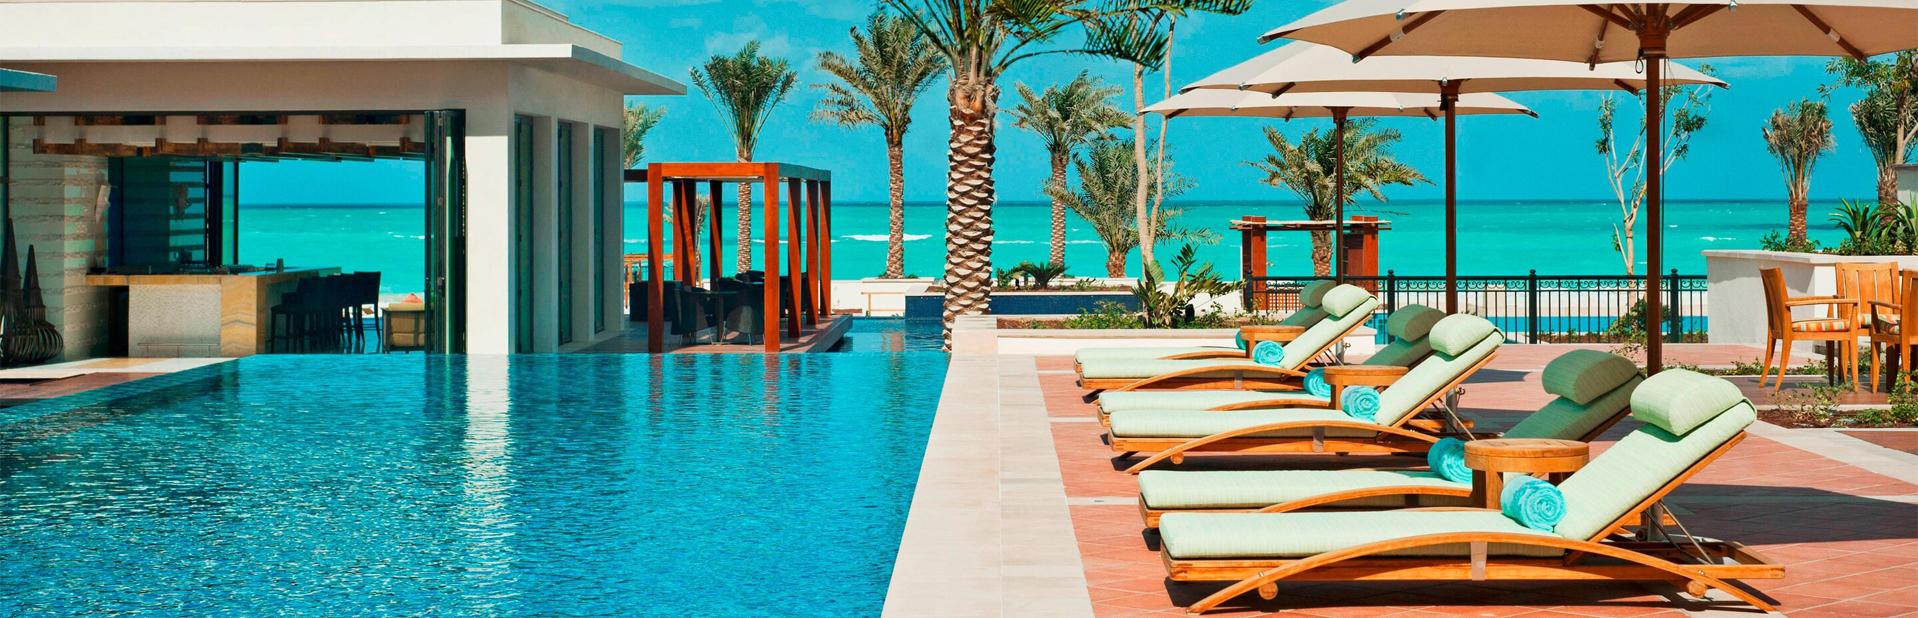 Отель The St. Regis Saadiyat Abu Dhabi Island Resort в Абу-Даби